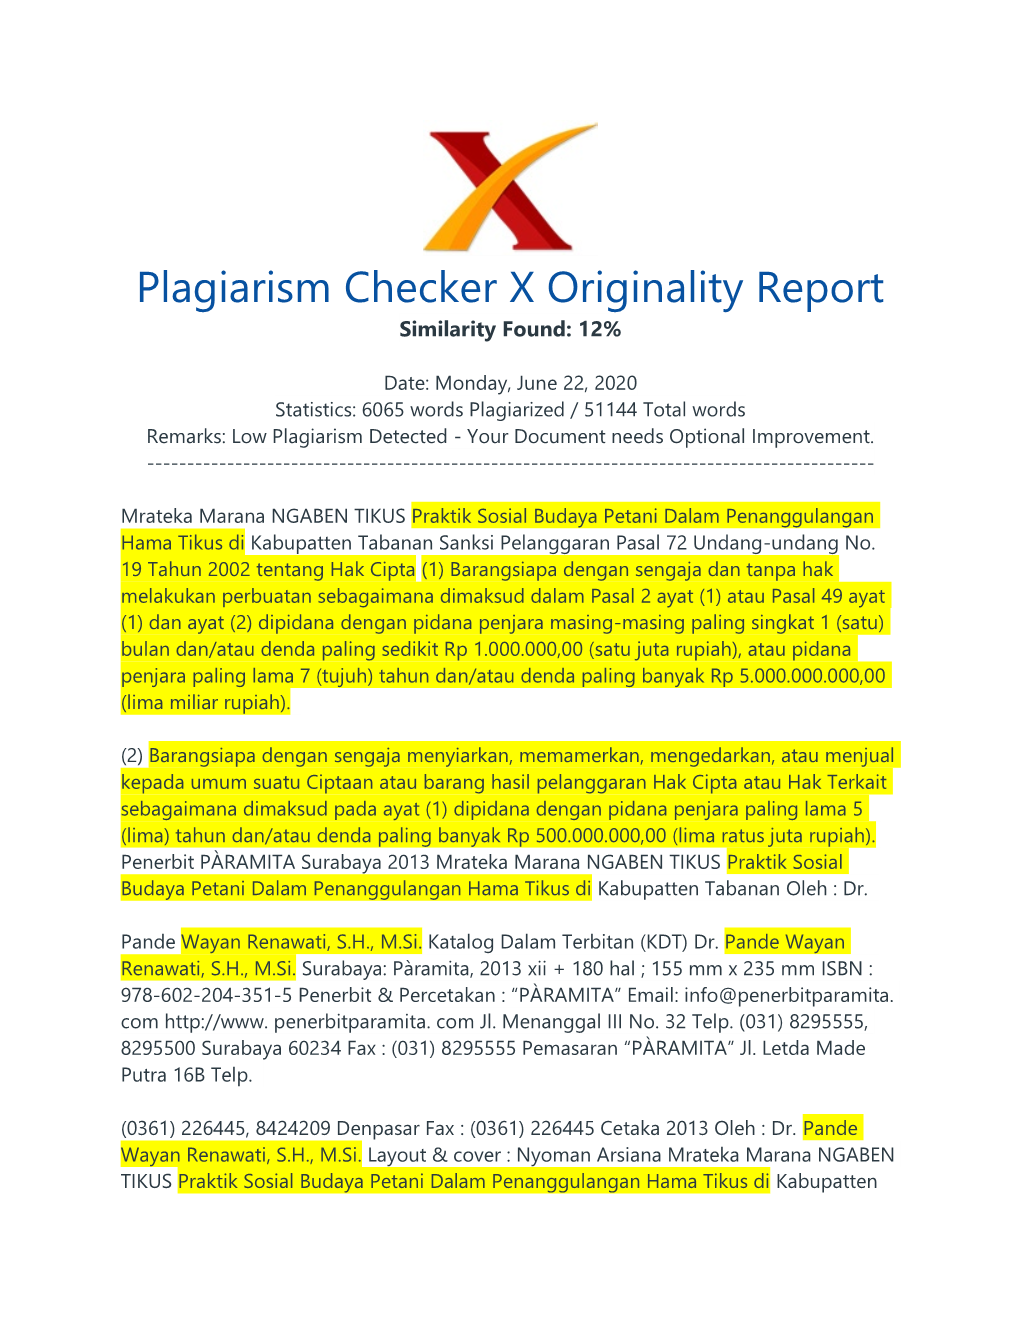 Plagiarism Checker X Originality Report Similarity Found: 12%